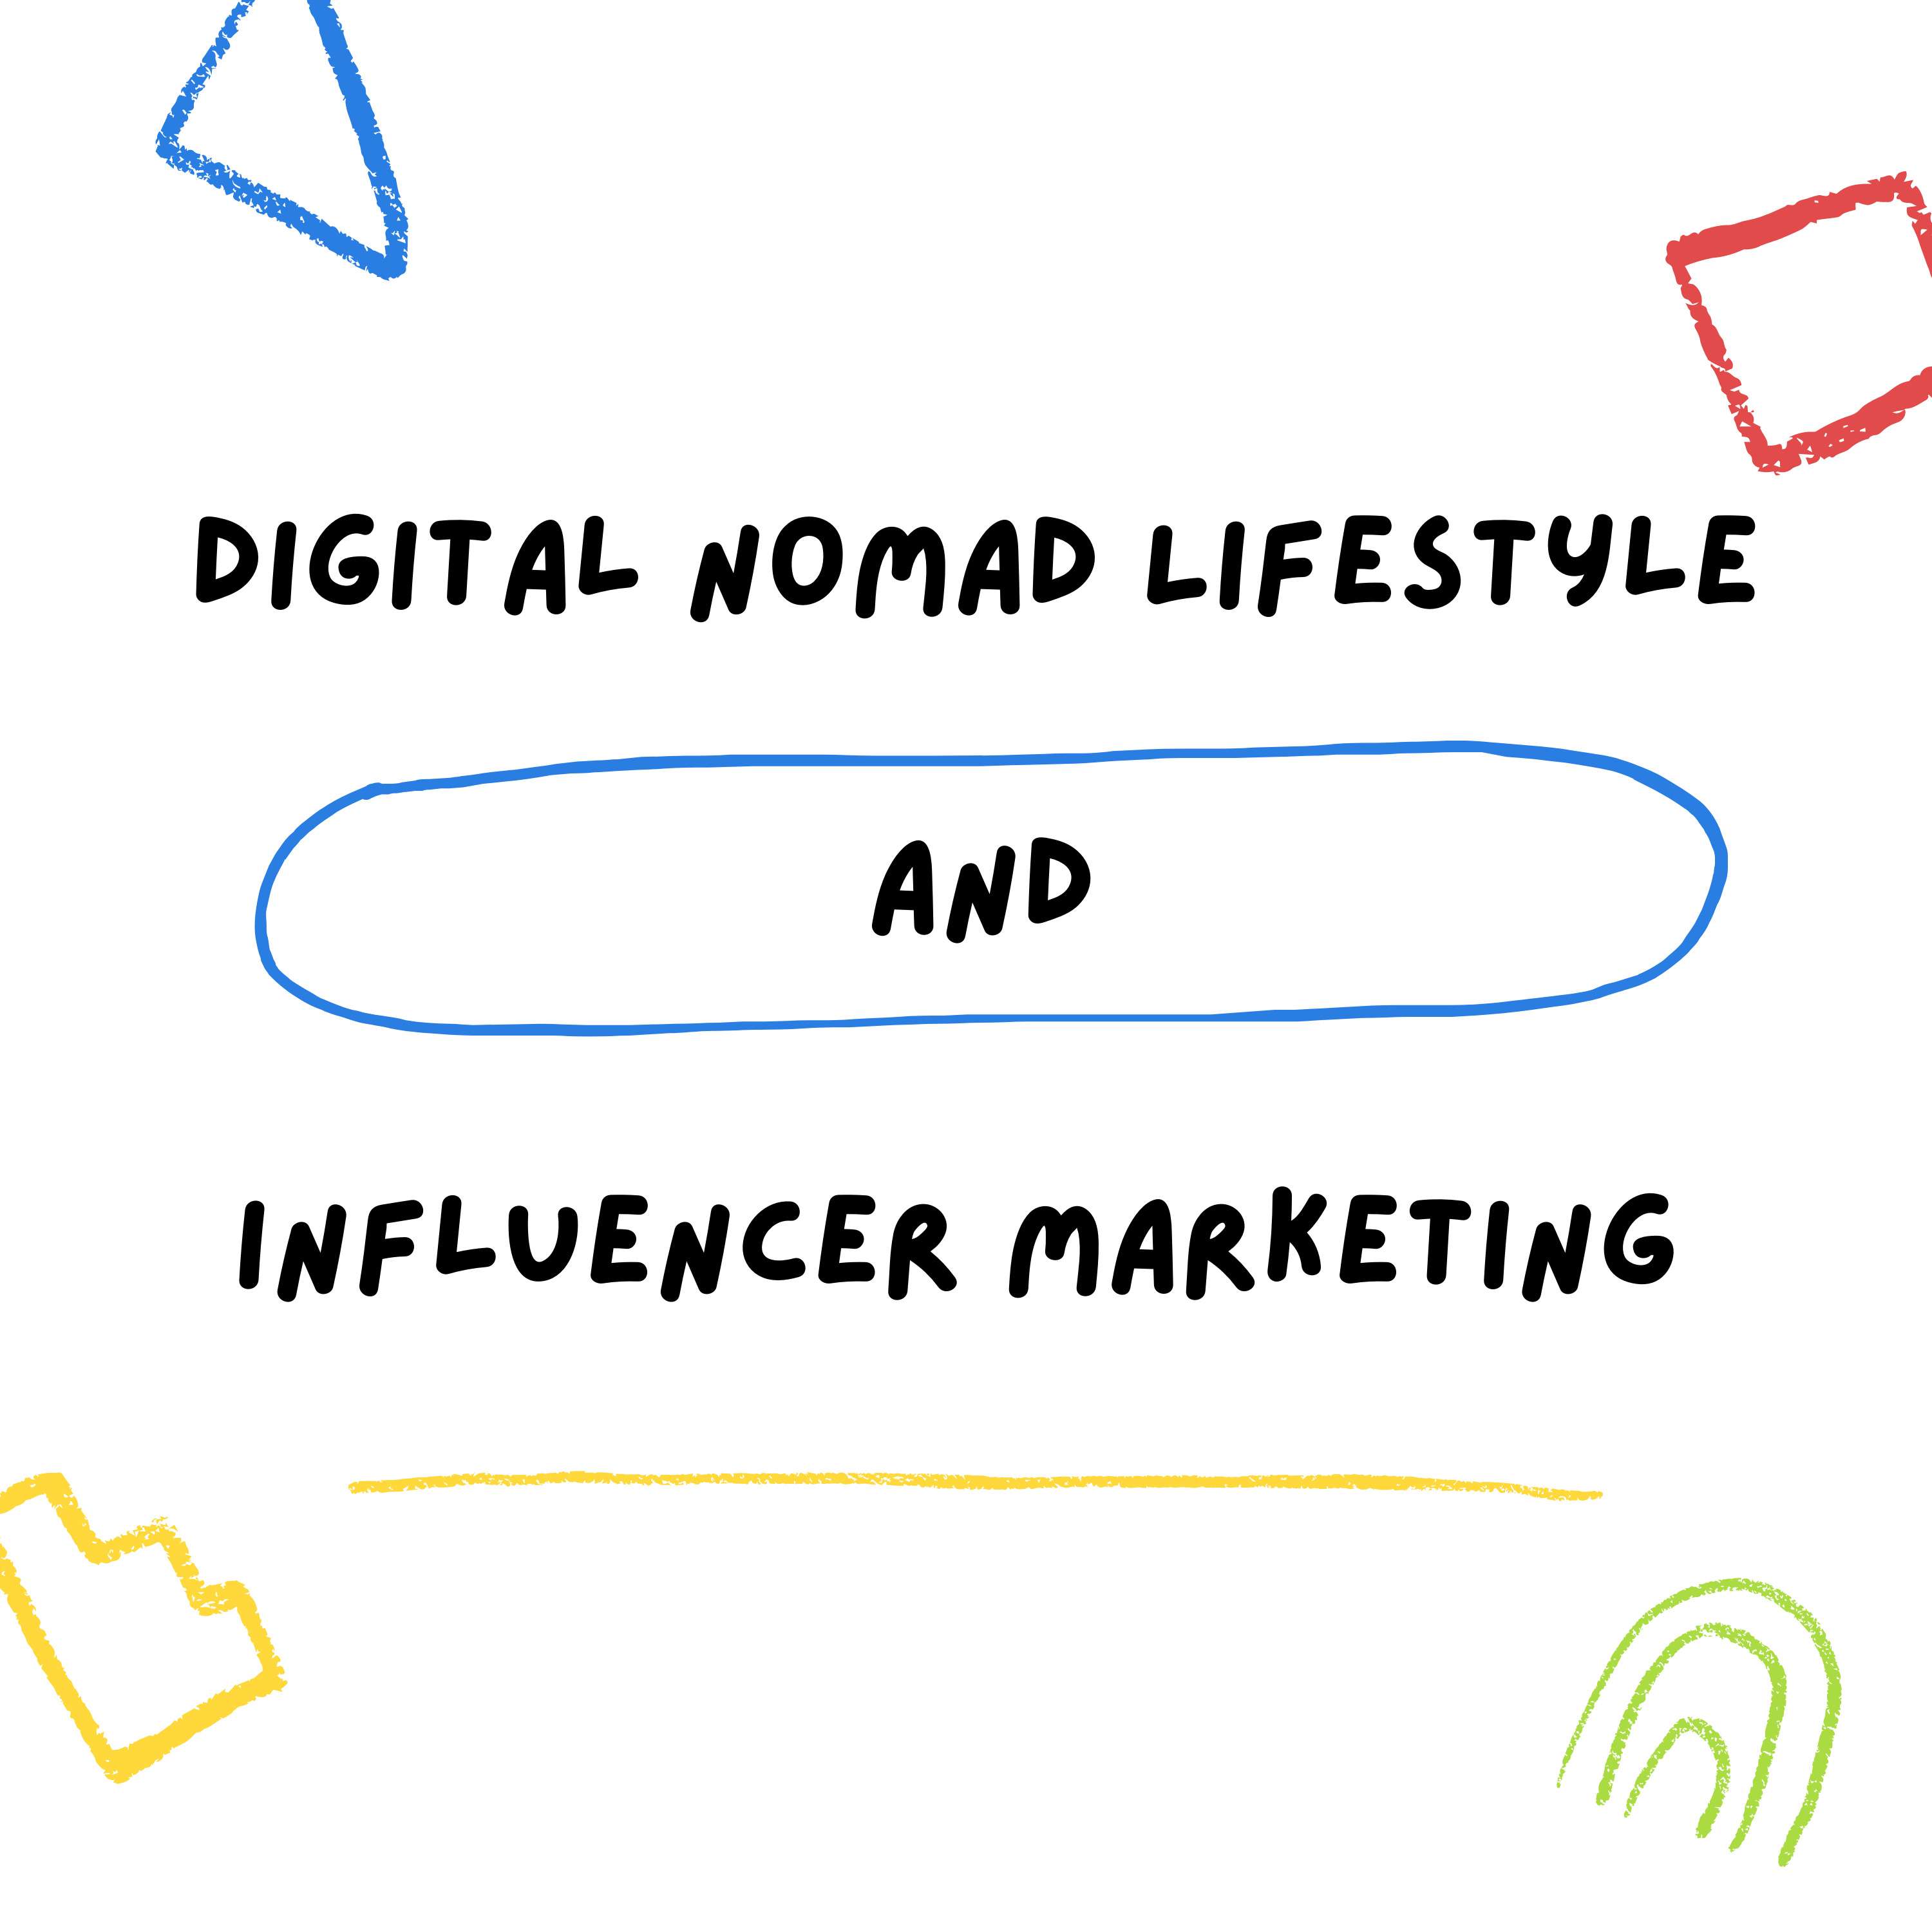 Digital Nomad Lifestyle and Influencer Marketing